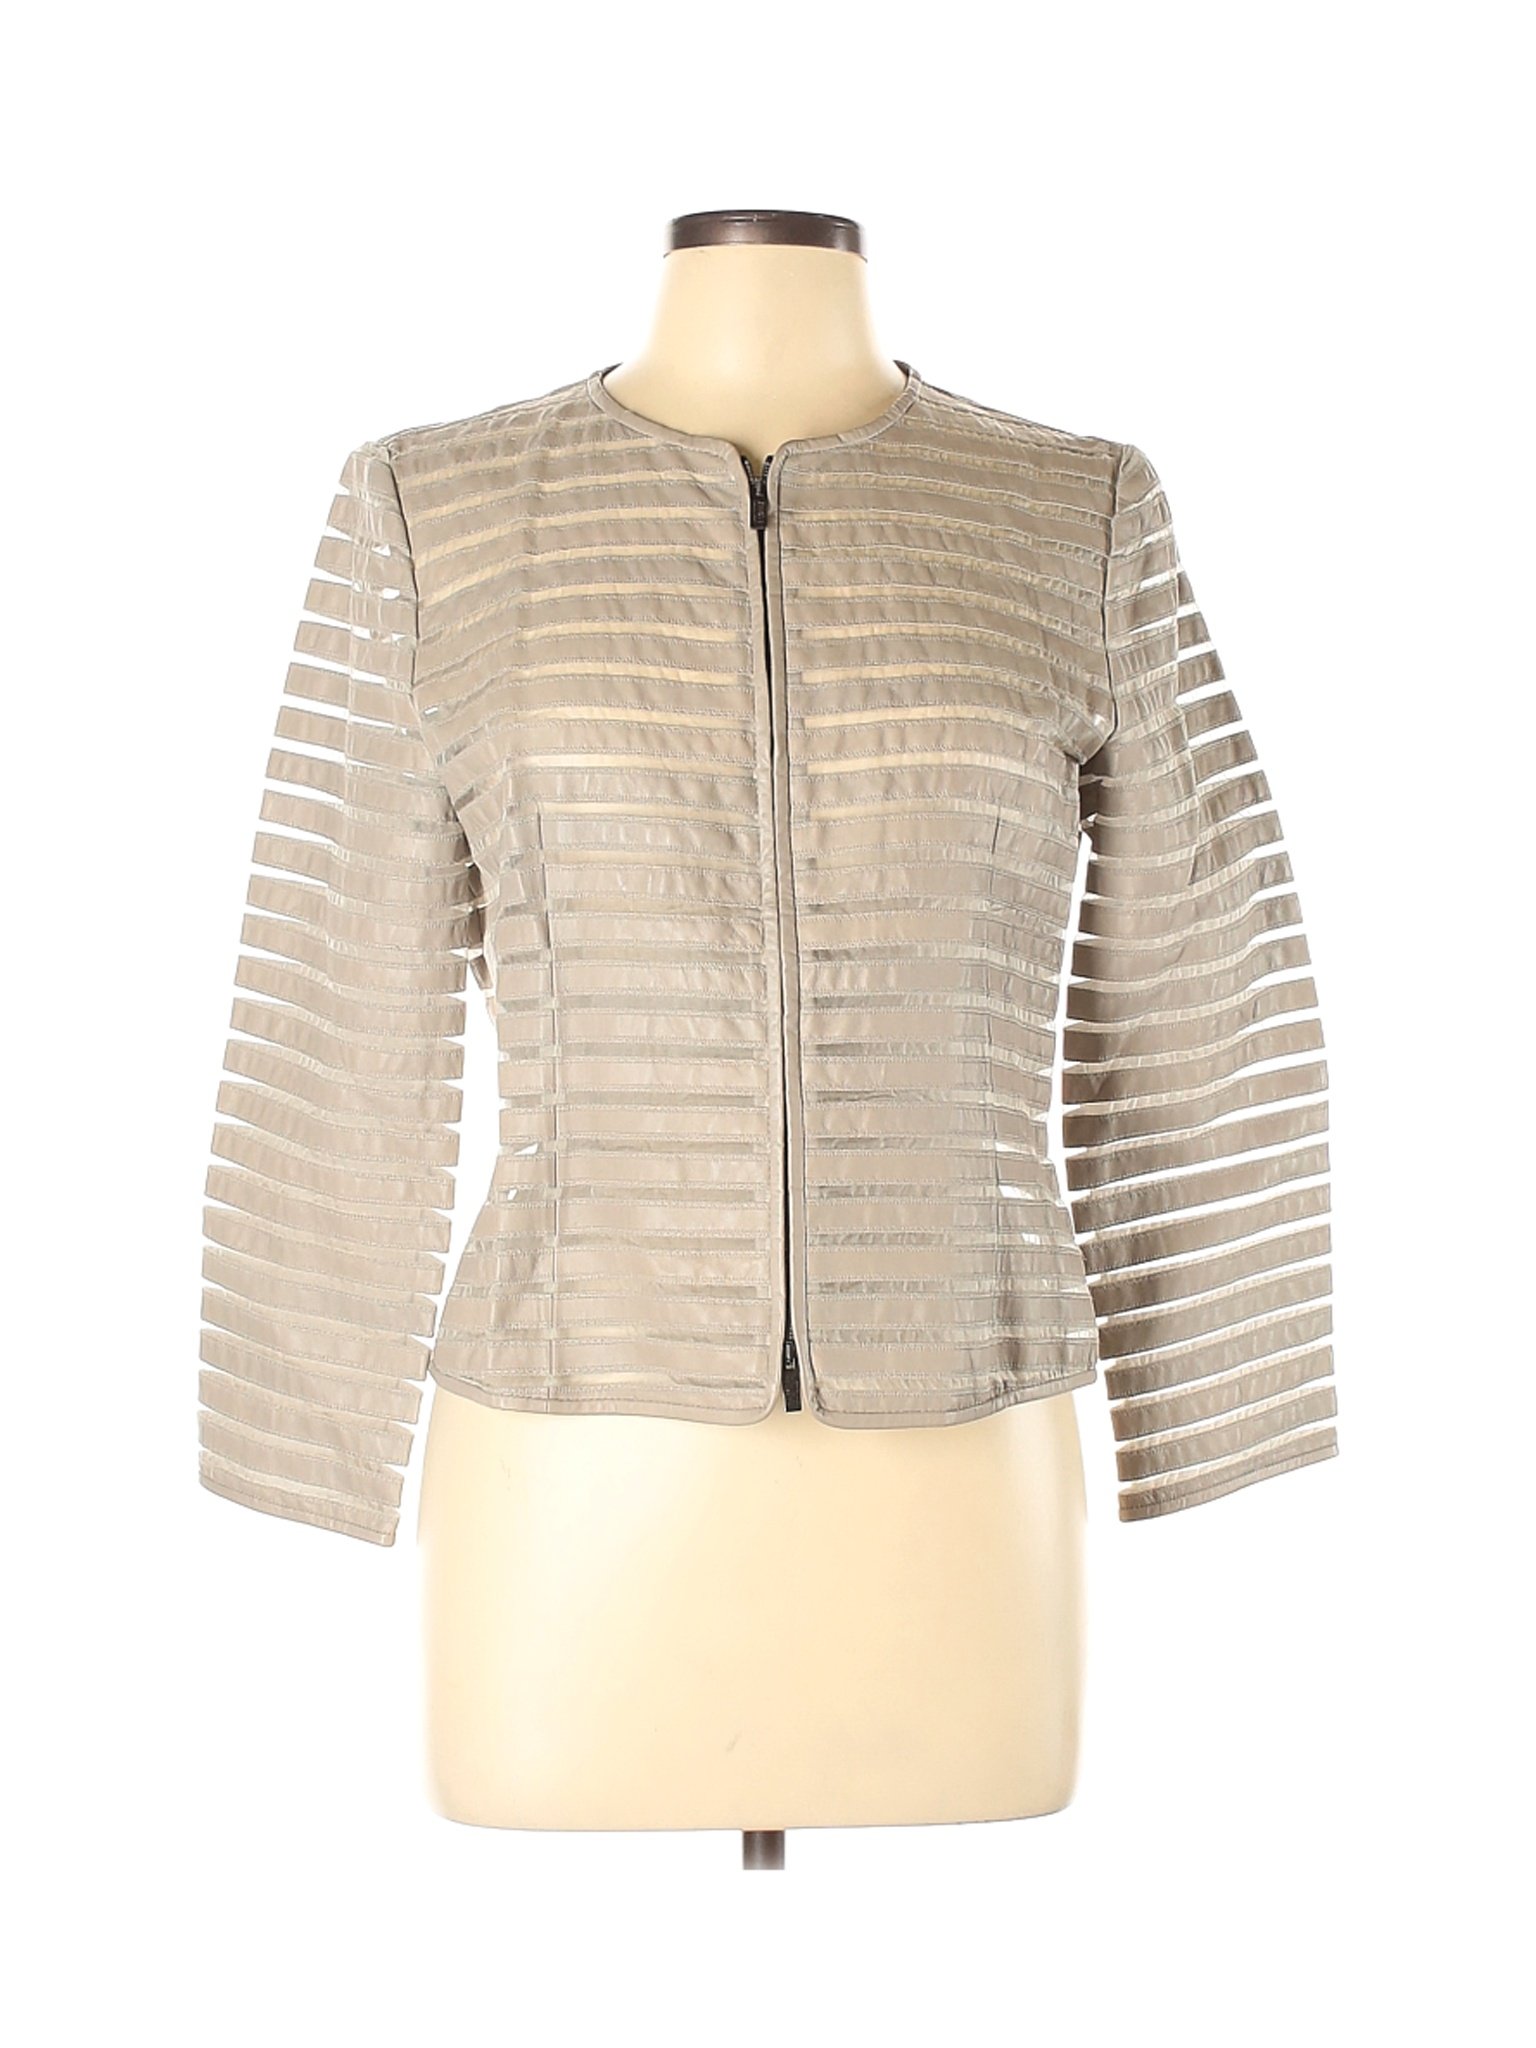 Armani Collezioni Women Brown Leather Jacket 10 | eBay